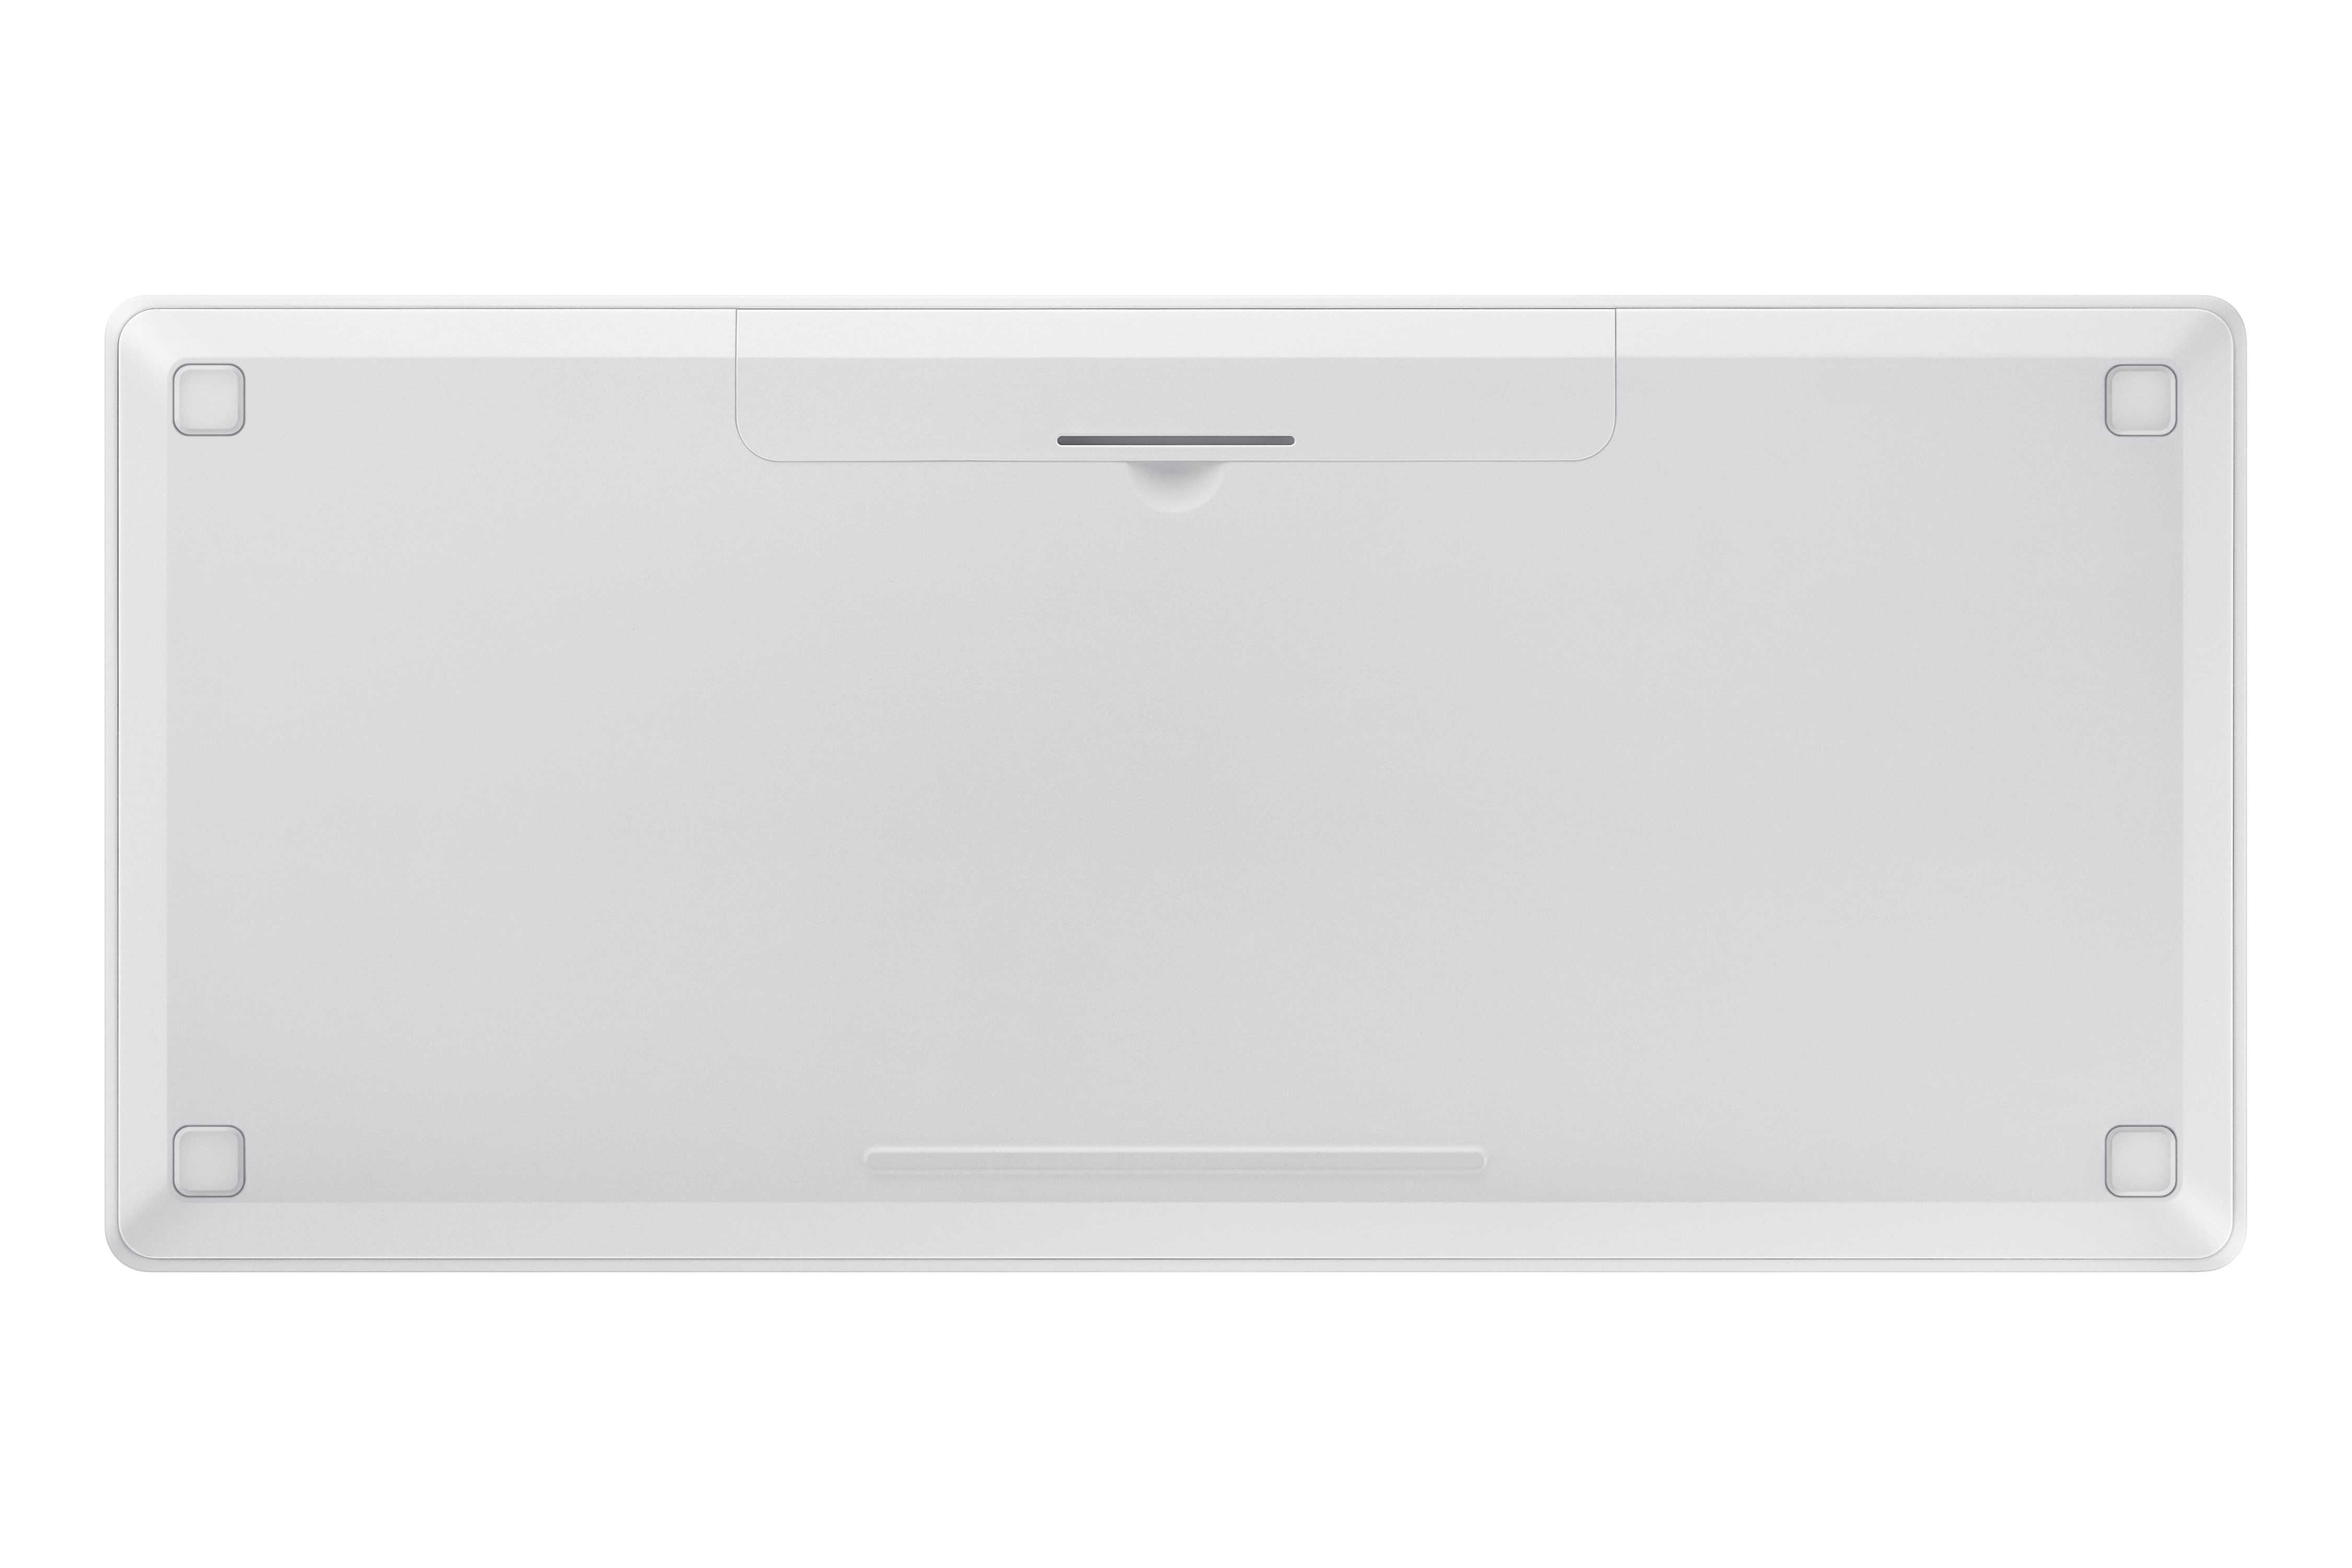 Smart Keyboard Trio 500, White Mobile EJ-B3400UWEGUS | Accessories Samsung - US